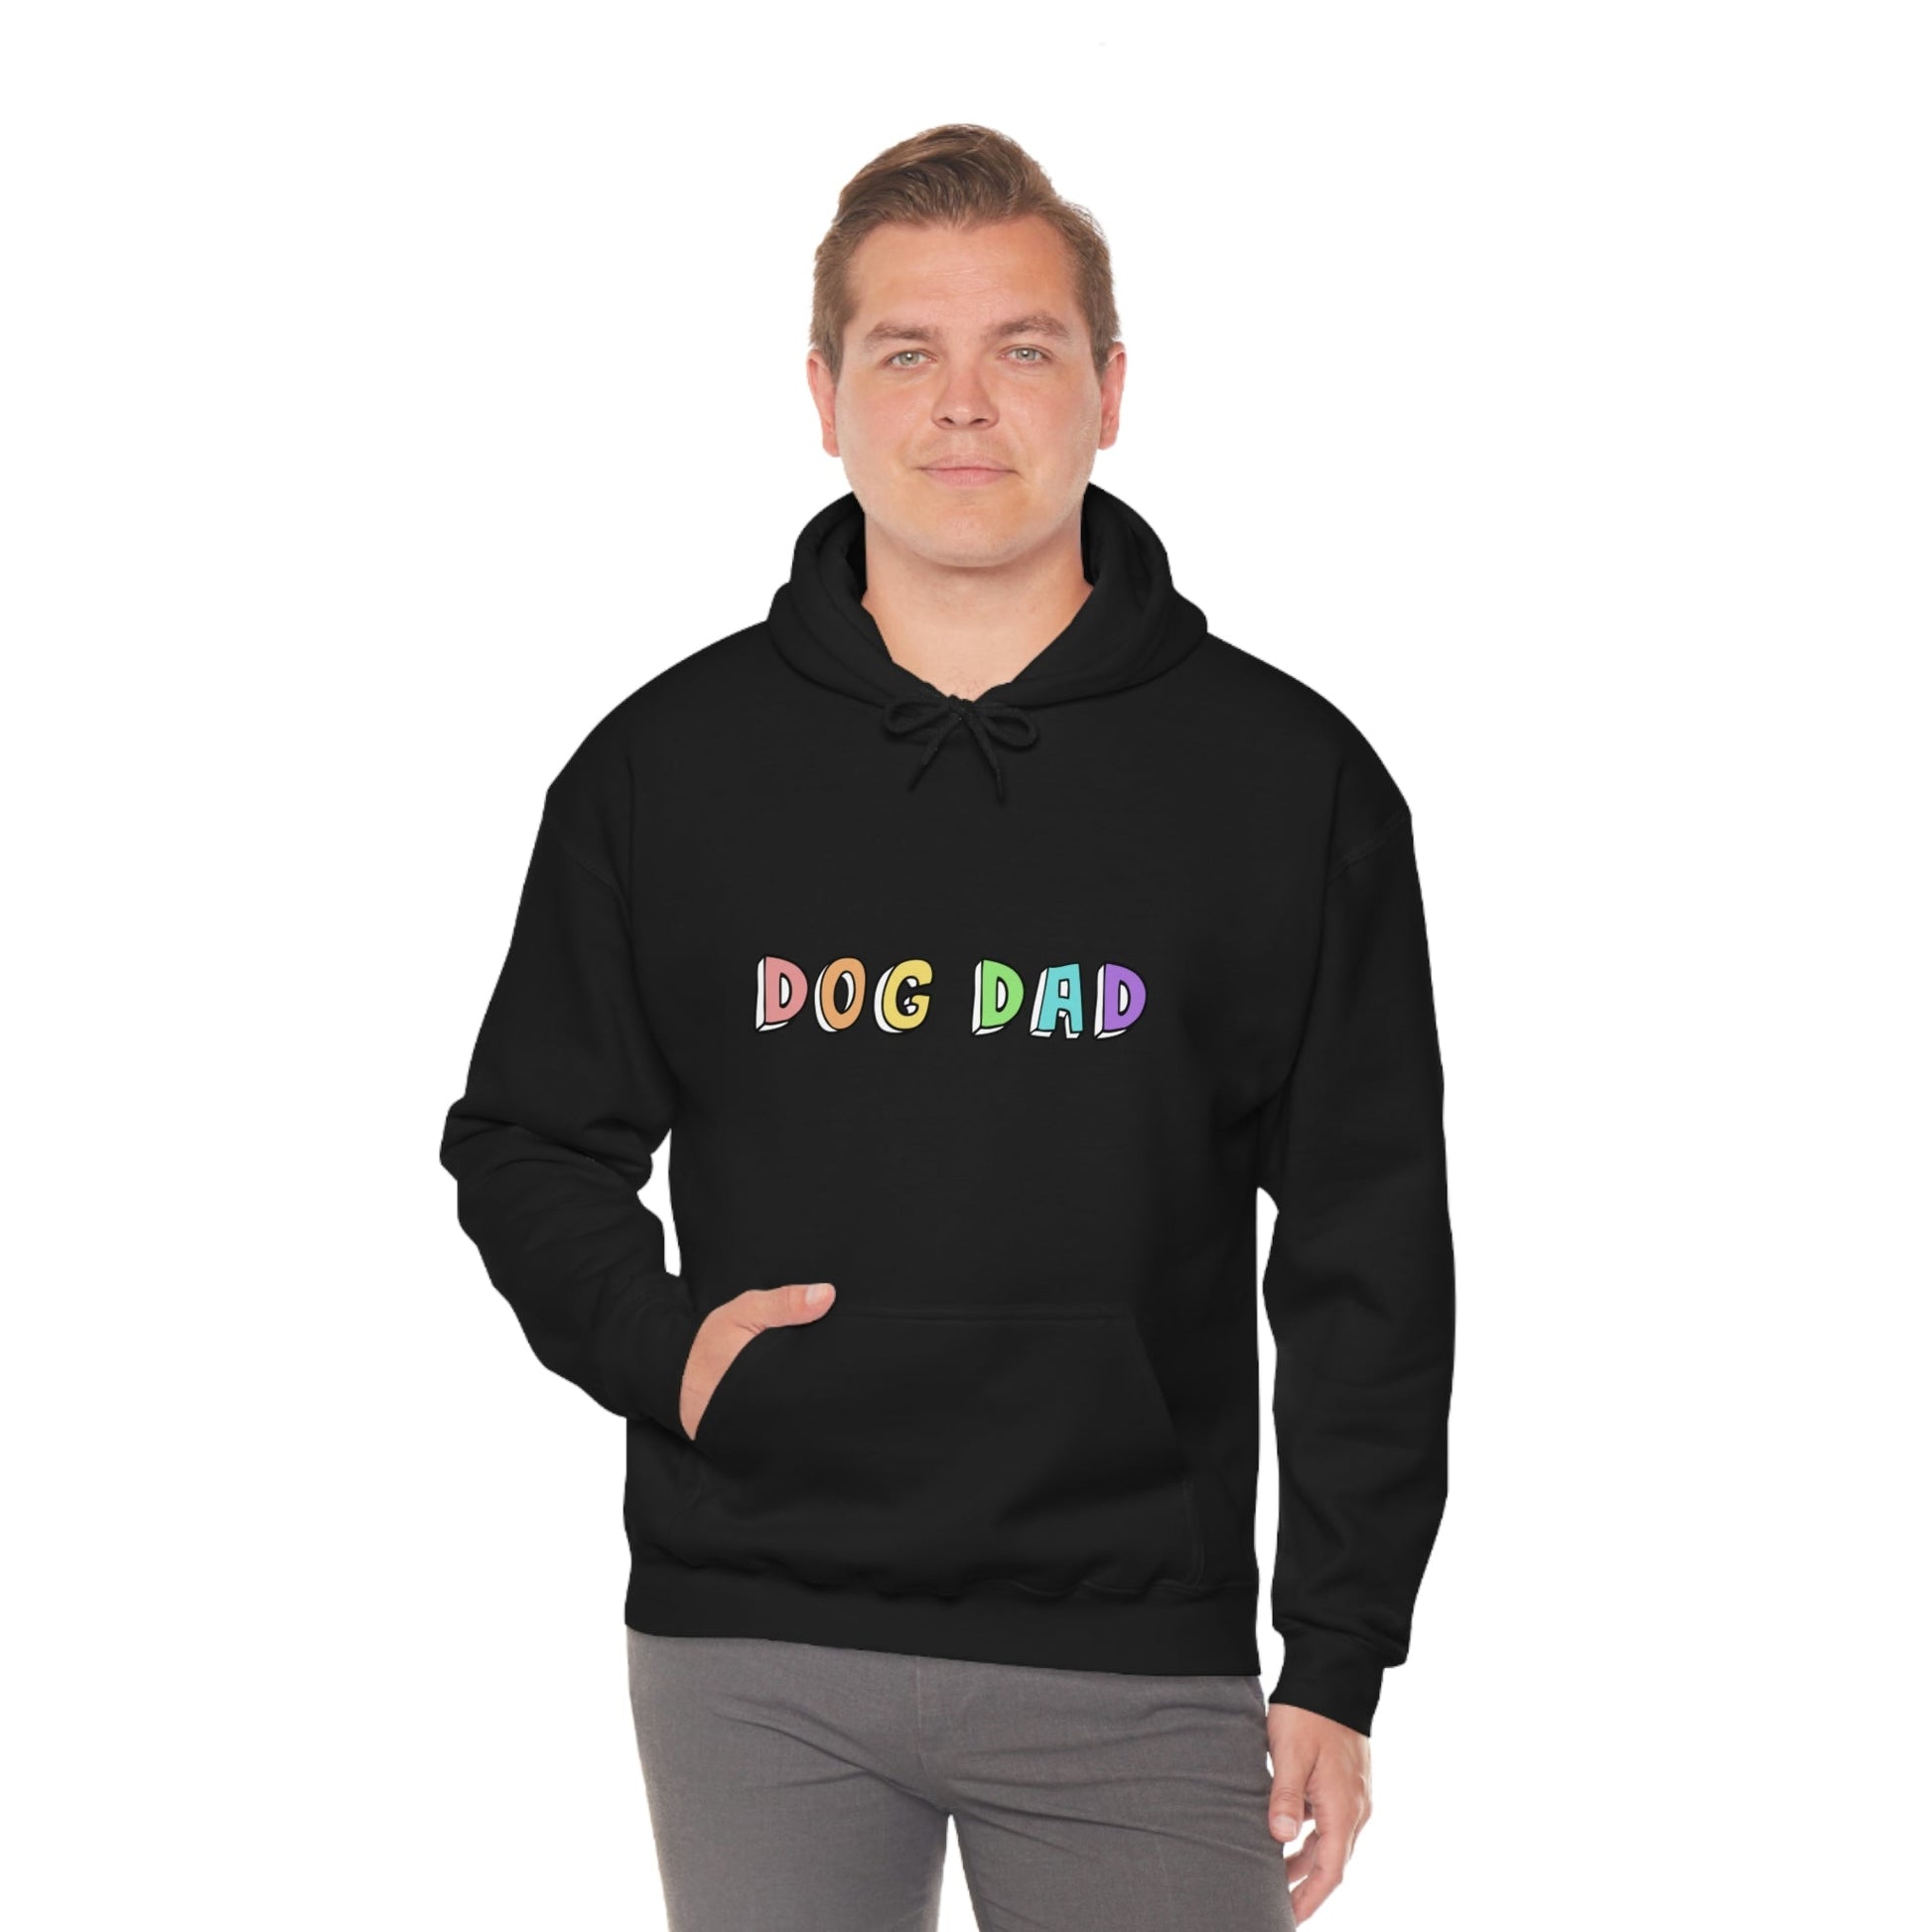 Dog Dad | Hooded Sweatshirt - Detezi Designs-11290759541388040210